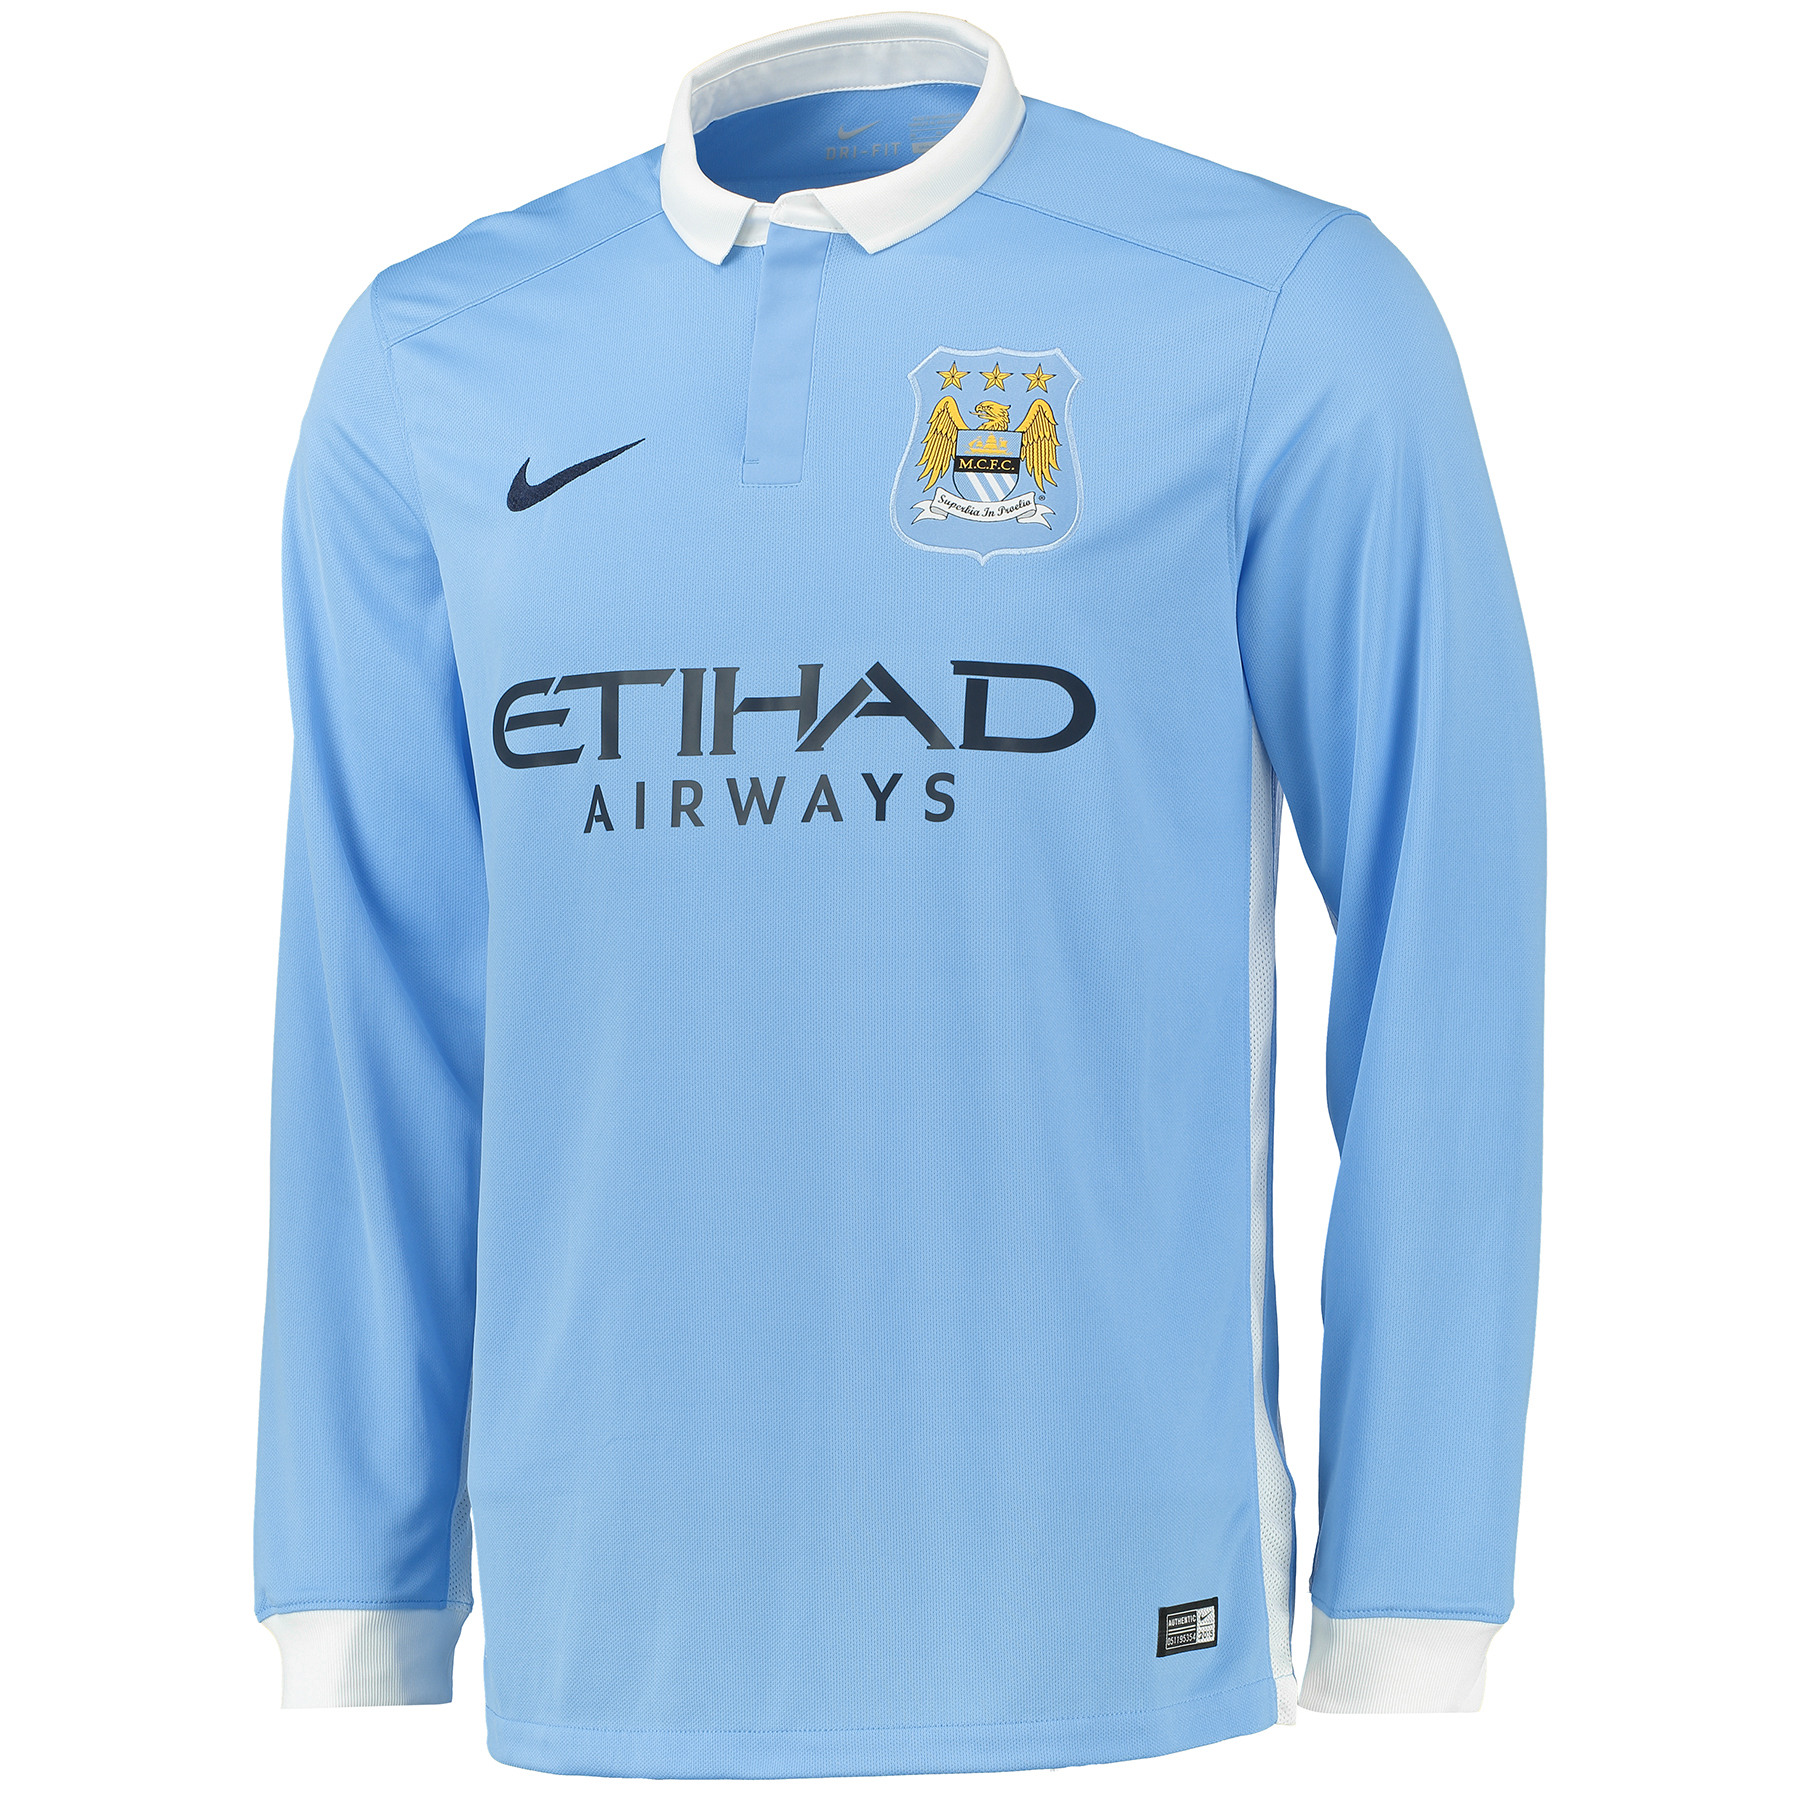 Manchester City Home Shirt 2015/16 - Long Sleeve Sky Blue